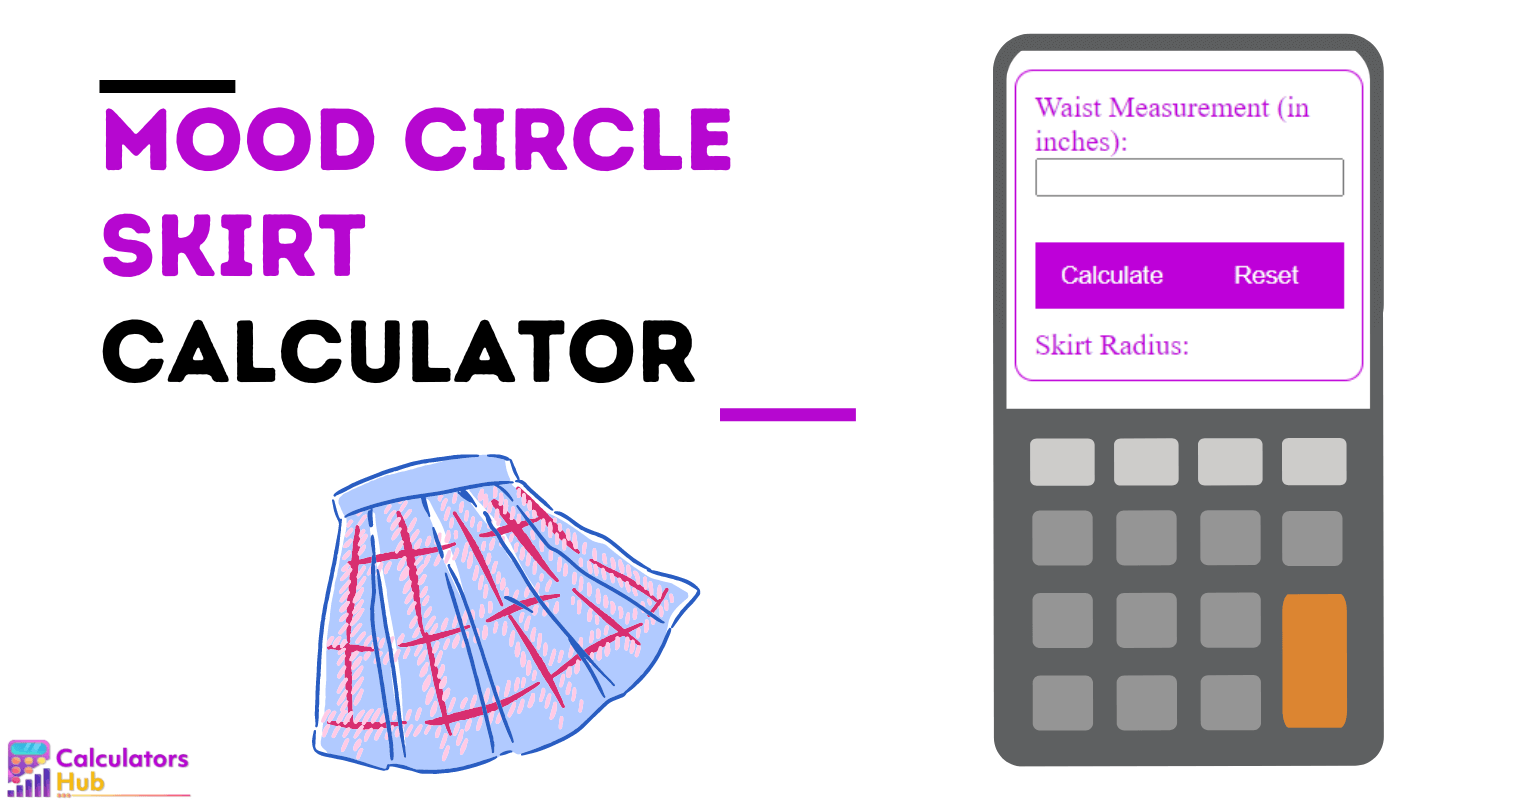 Mood Circle Skirt Calculator